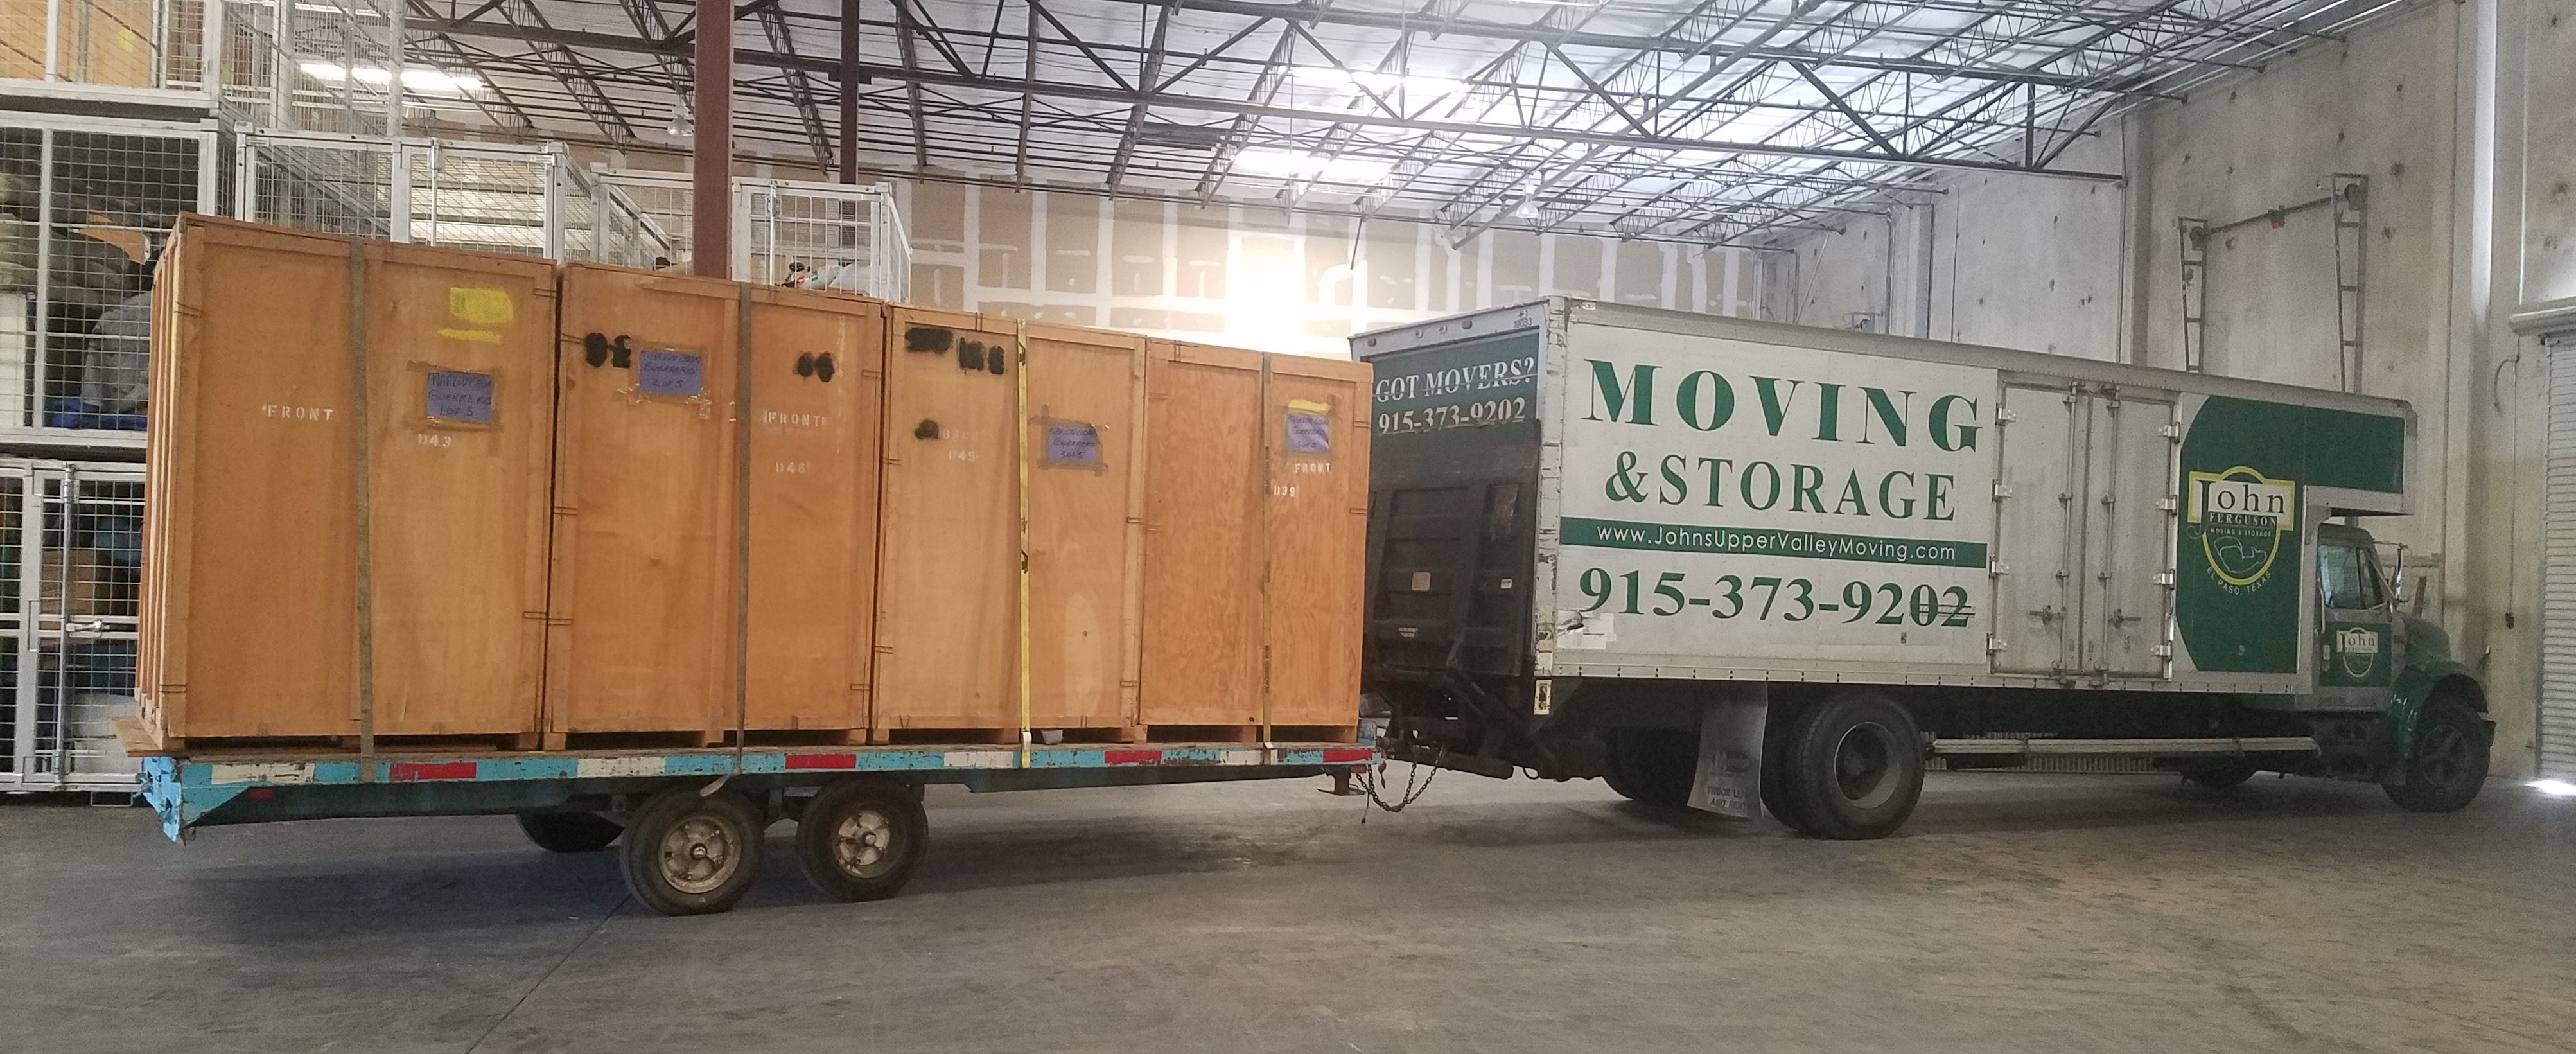 moving truck inside warehouse